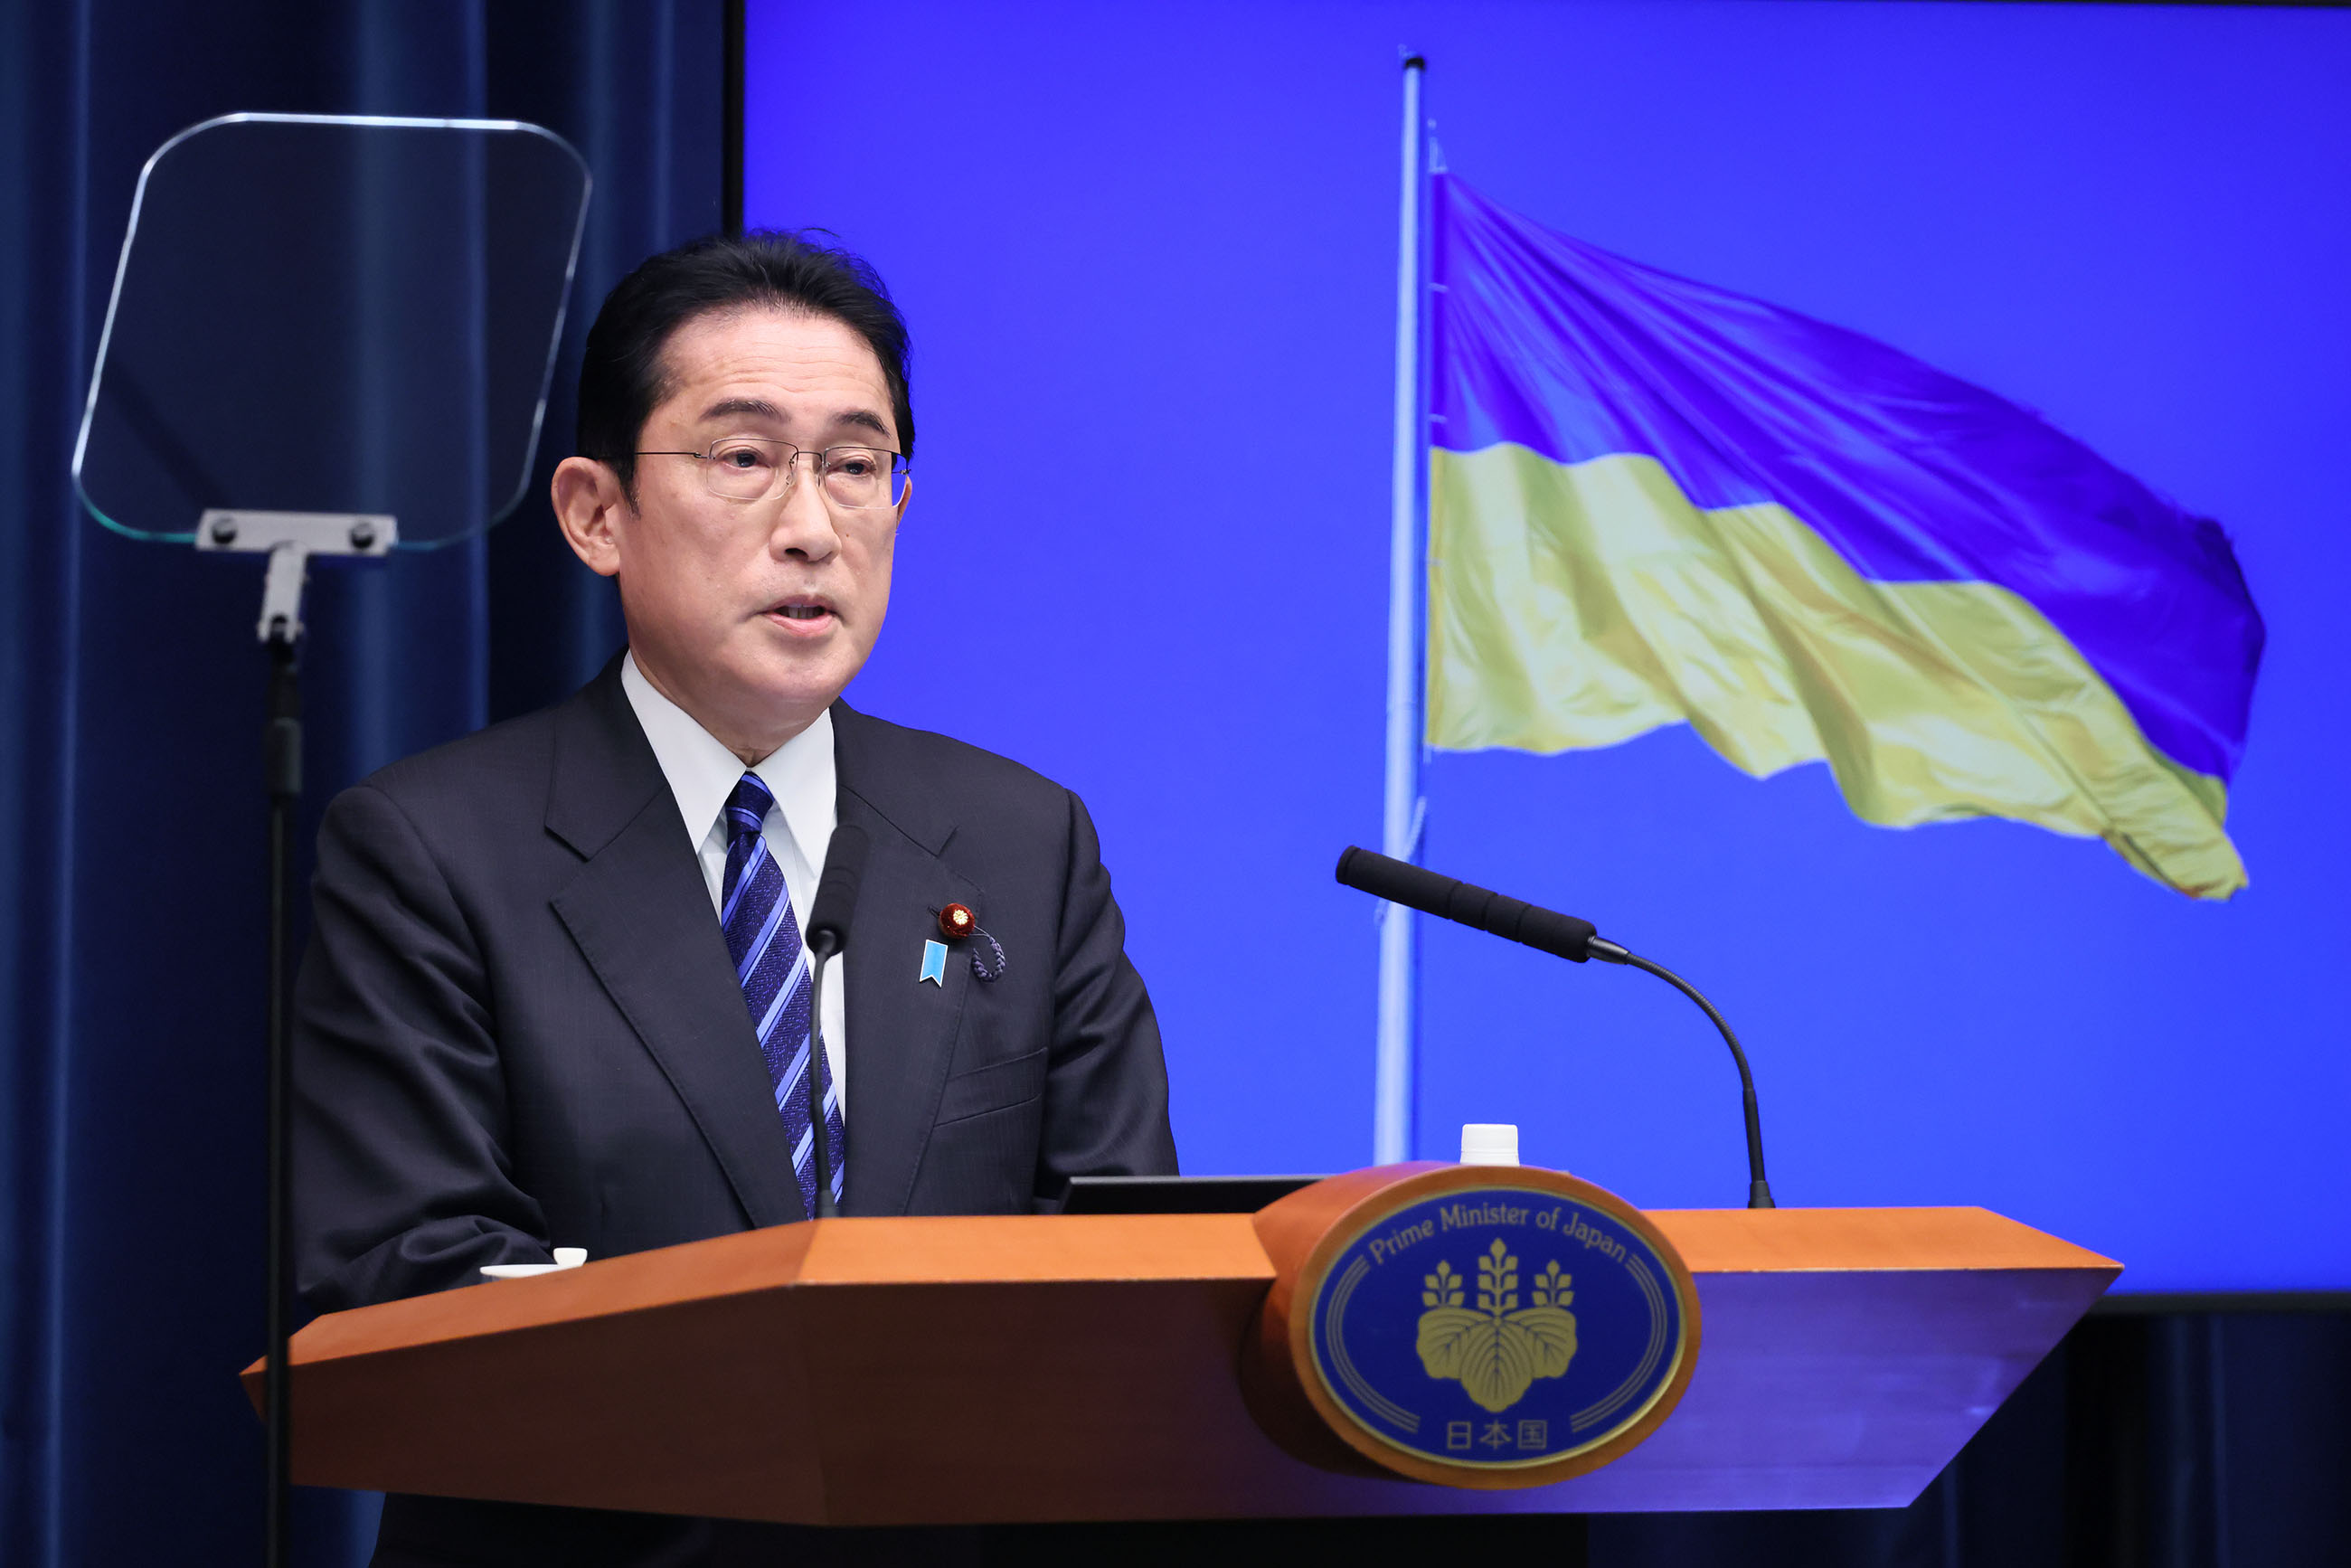 Prime Minister Kishida making an opening statement (1)